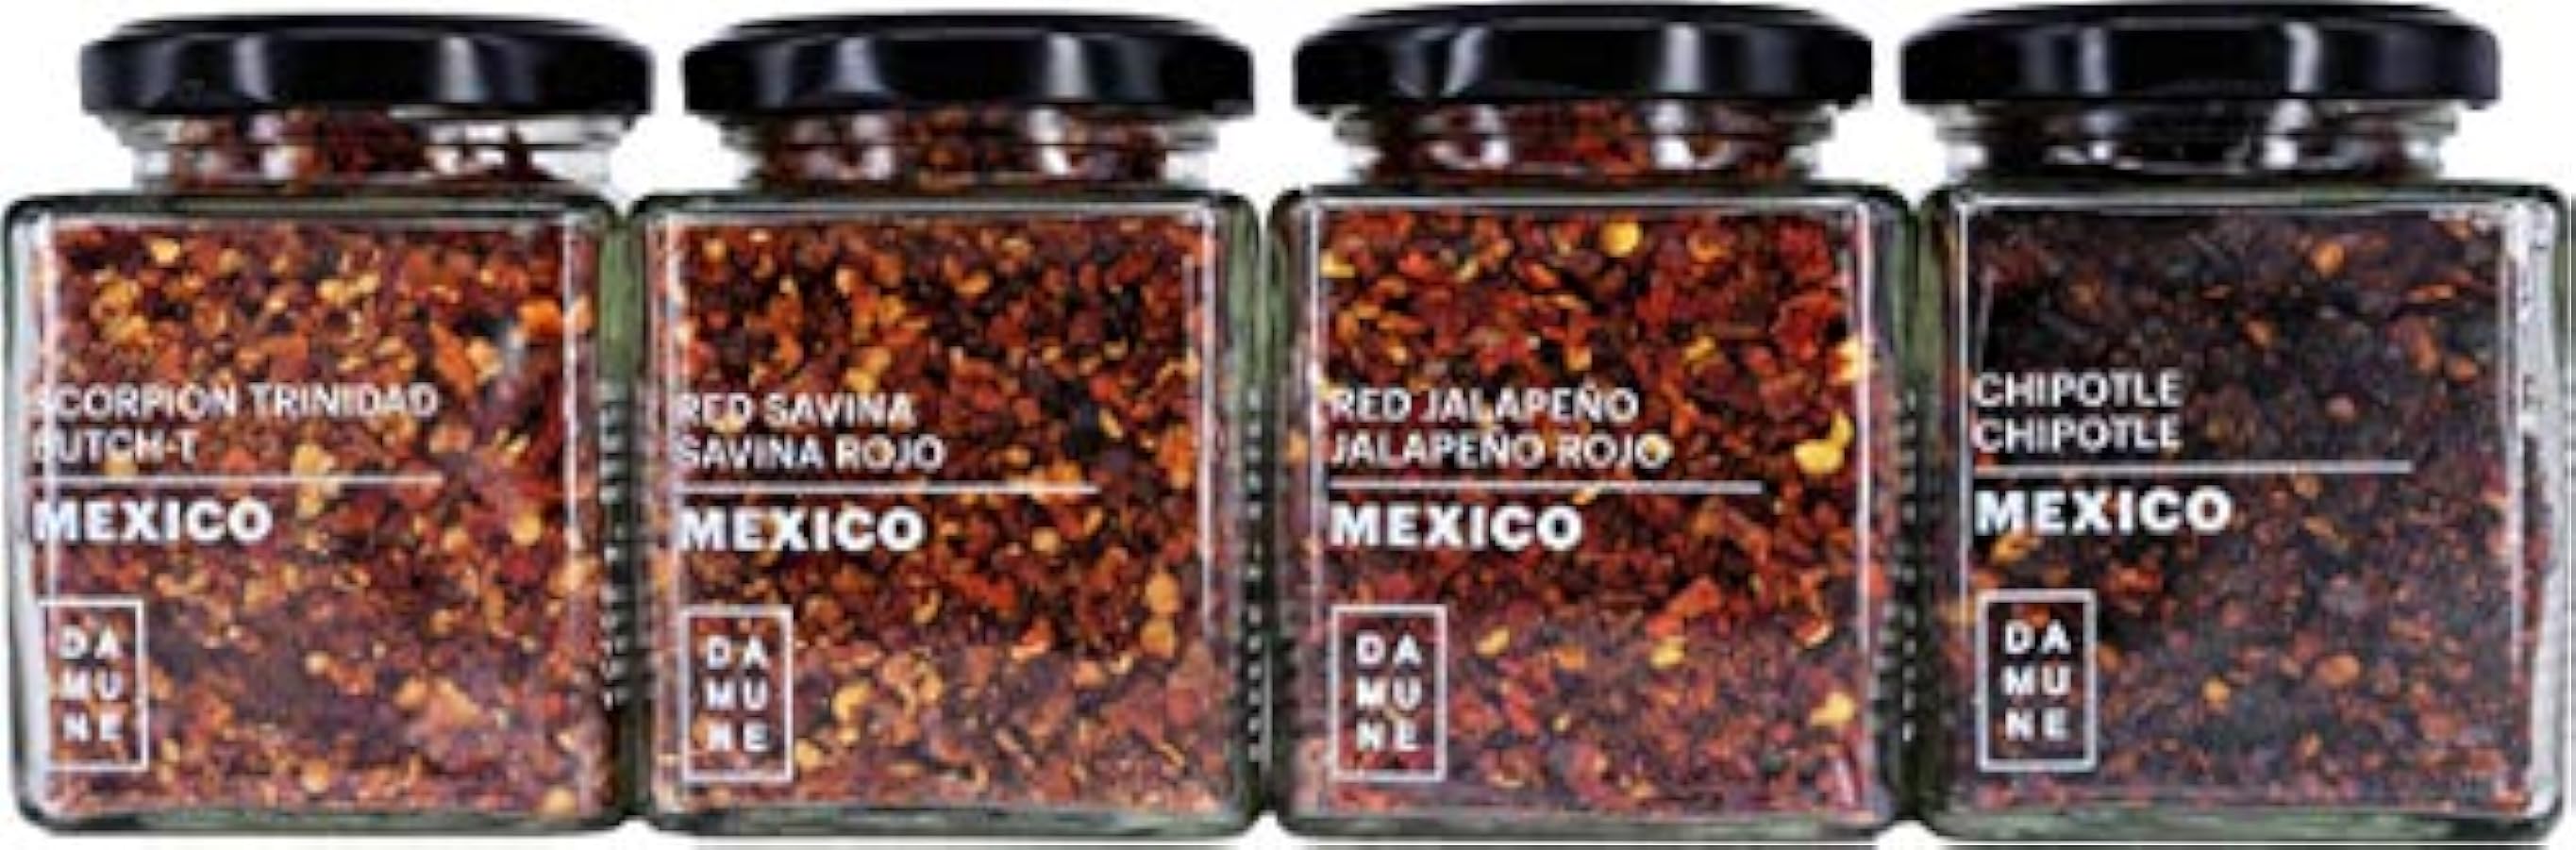 Fiocchi di Peperoncino: Jalapeño Red a Scaglie Messico 